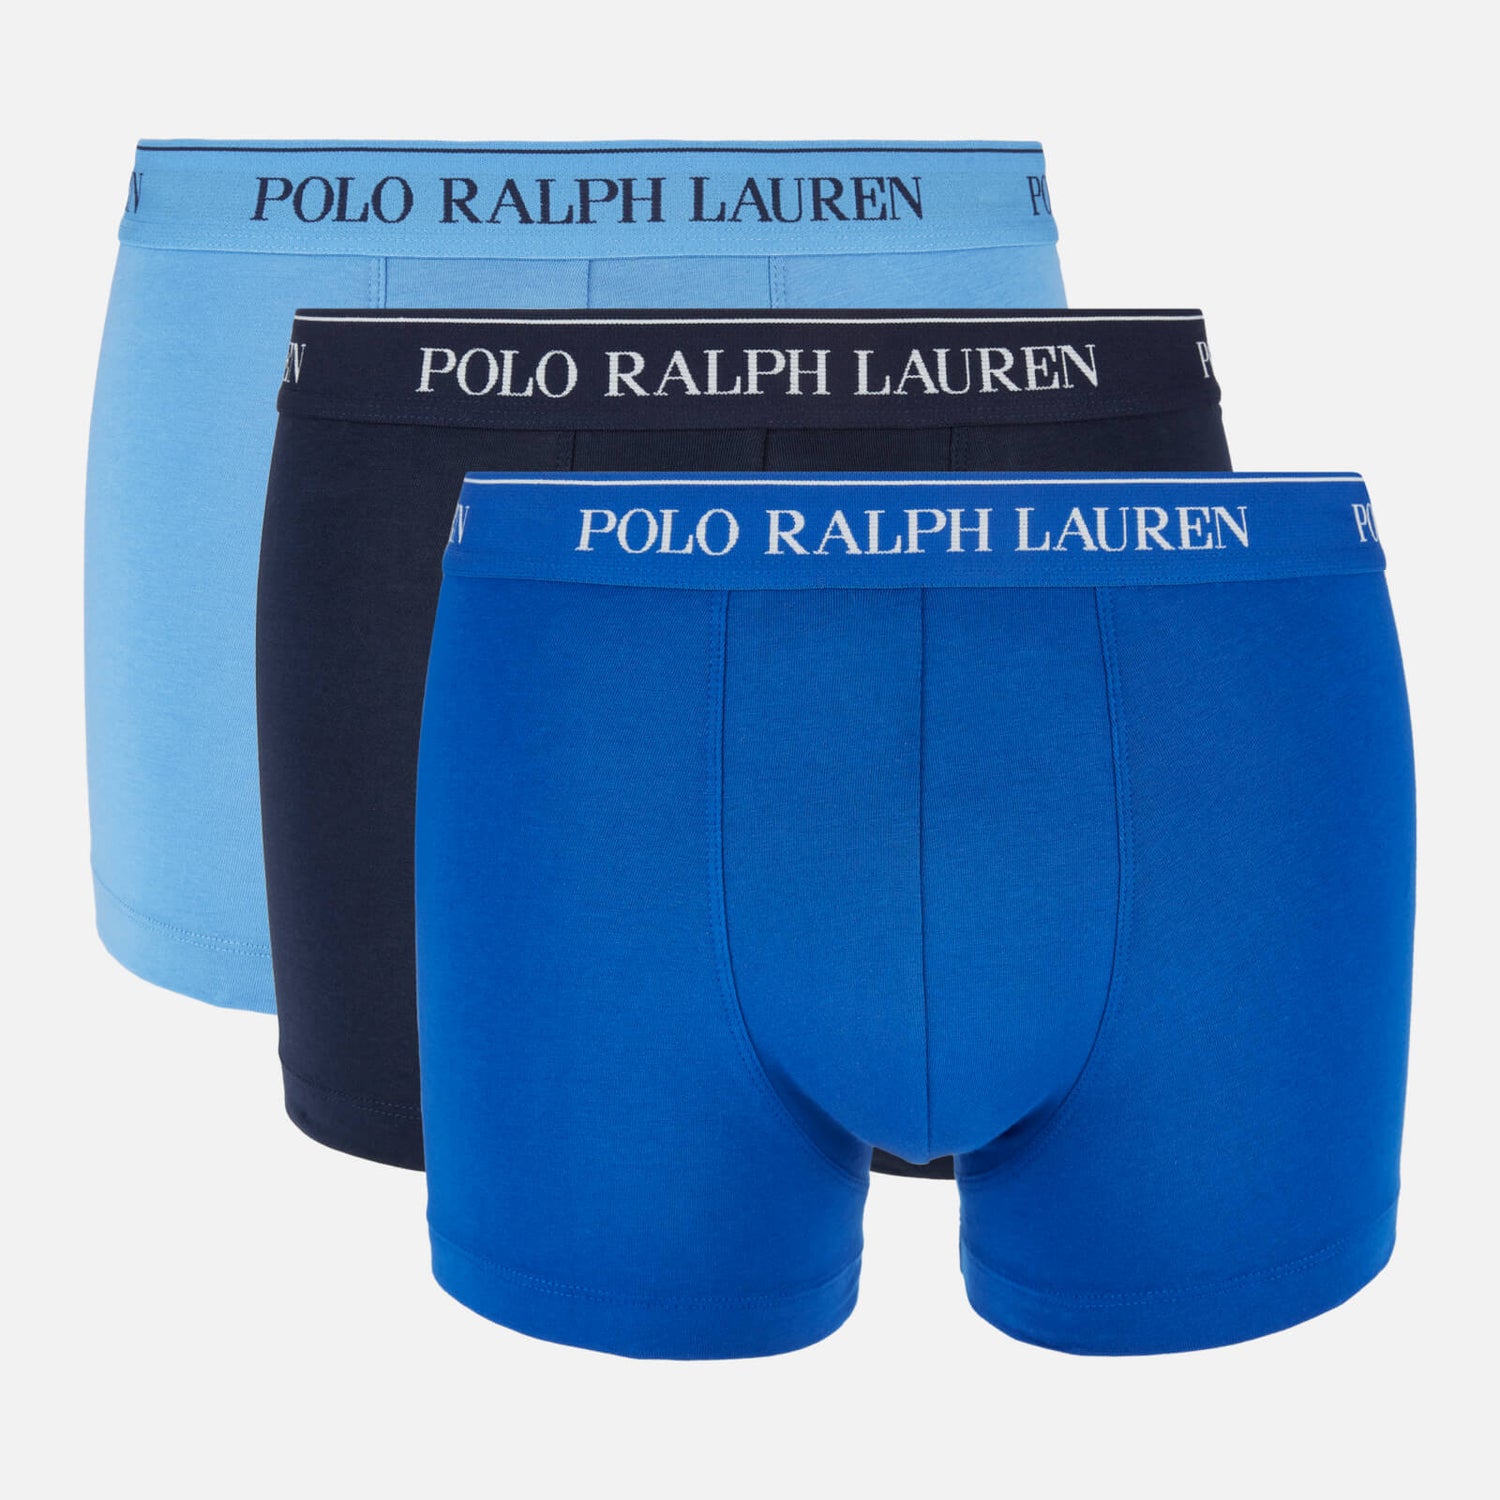 Polo Ralph Lauren Men's Classic 3 Pack Trunks - Cruise Navy/Saphire Star/Bermuda Blue - L